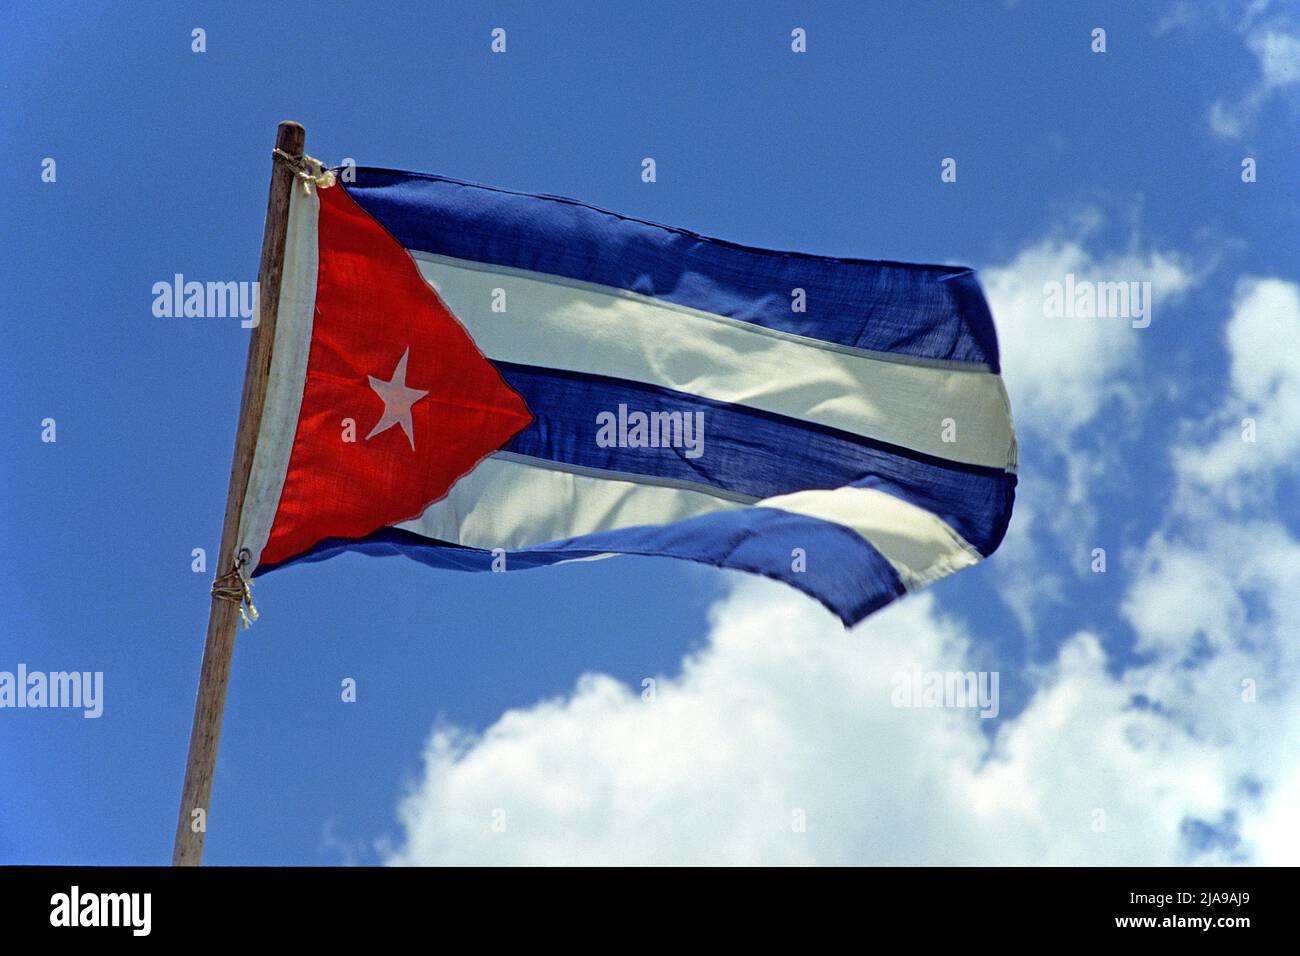 Bandera nacional de Cuba, ondeando, La Habana, Cuba, Caribe Foto de stock